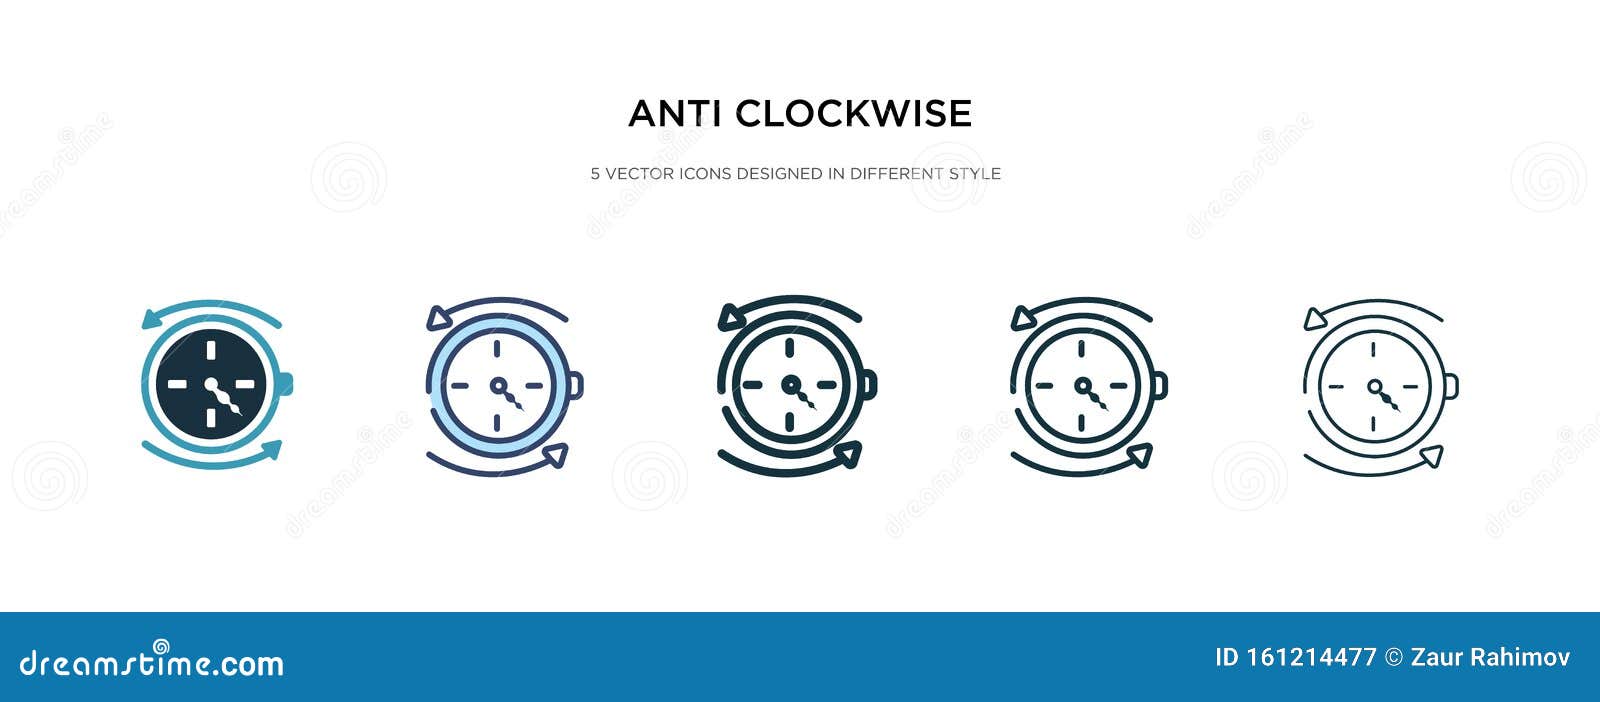 anti clockwise